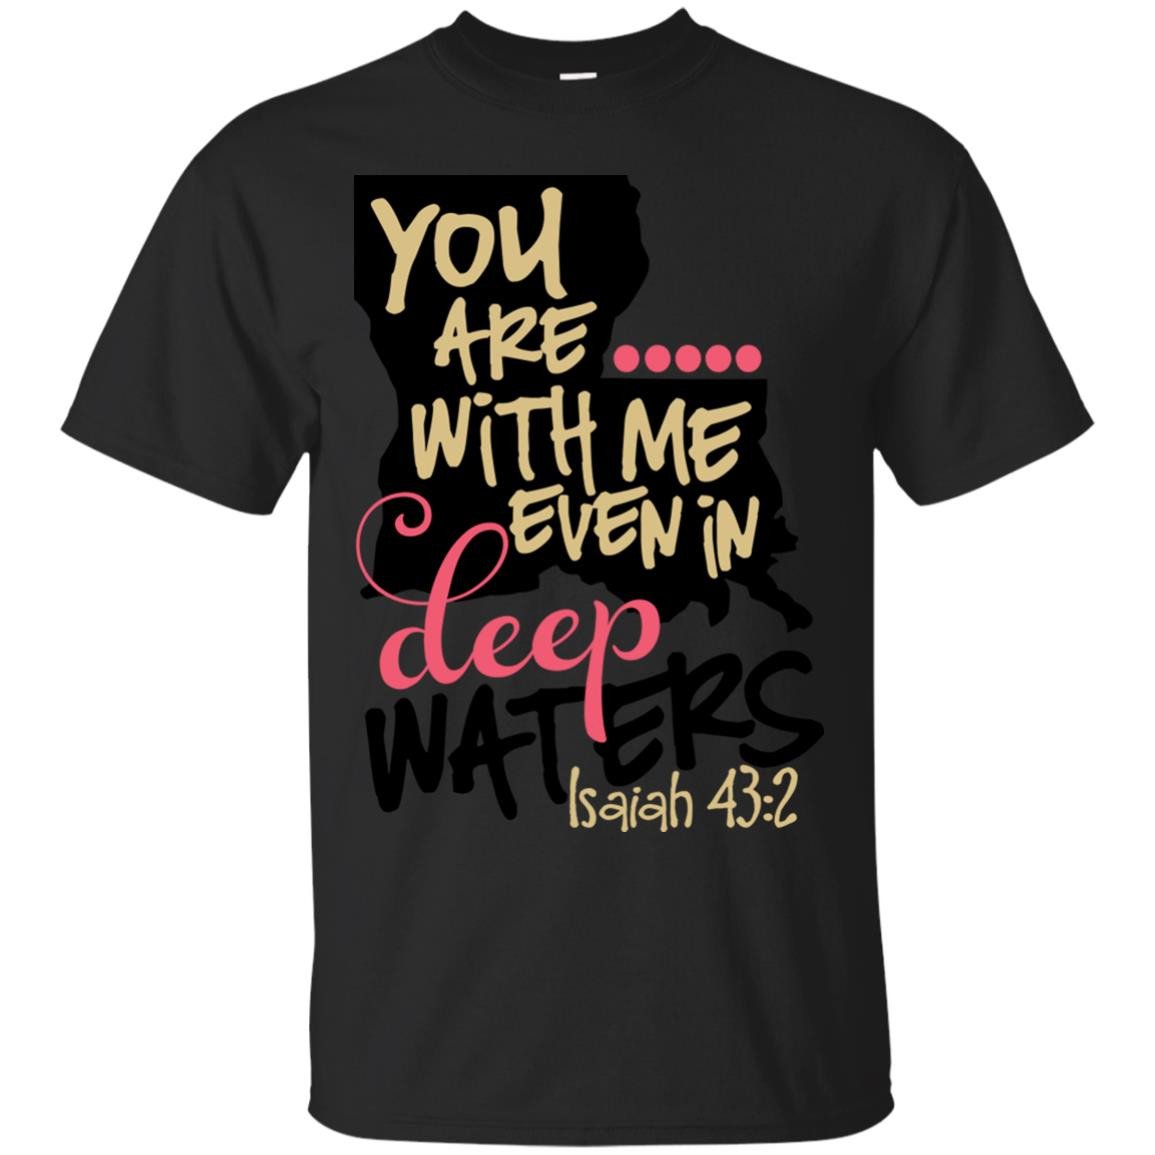 Isaiah 432 Louisiana Themed Bible Verse T Shirt